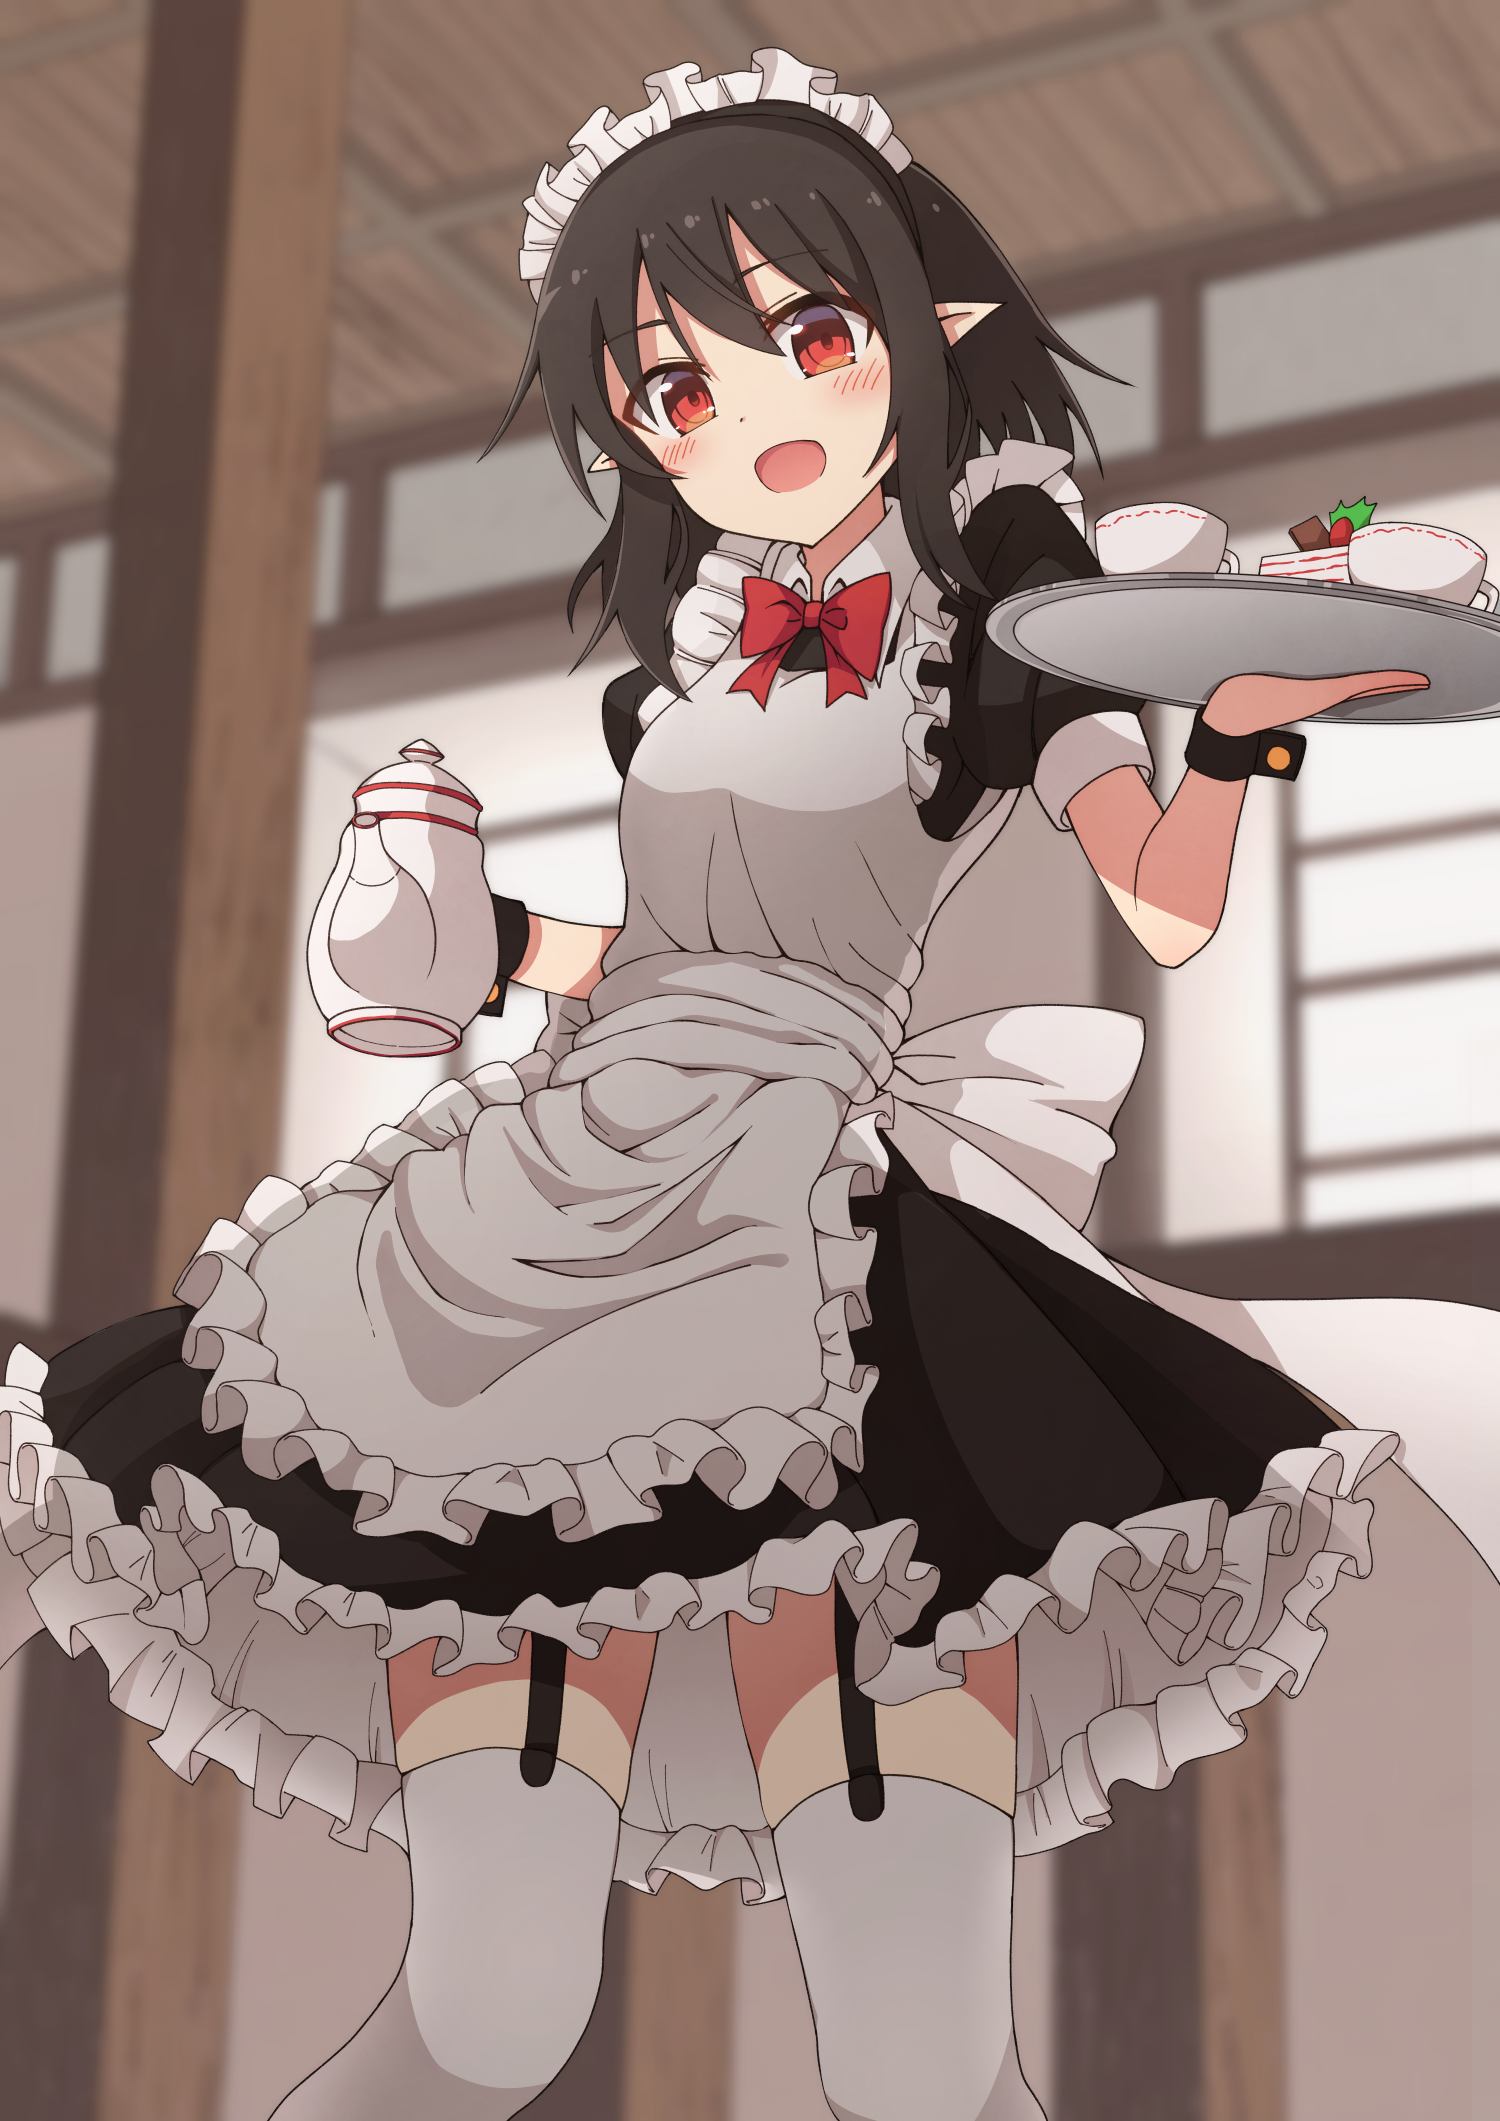 Cute anime girl Shameimaru Aya in maid outfit [Artist: Taki sandstone